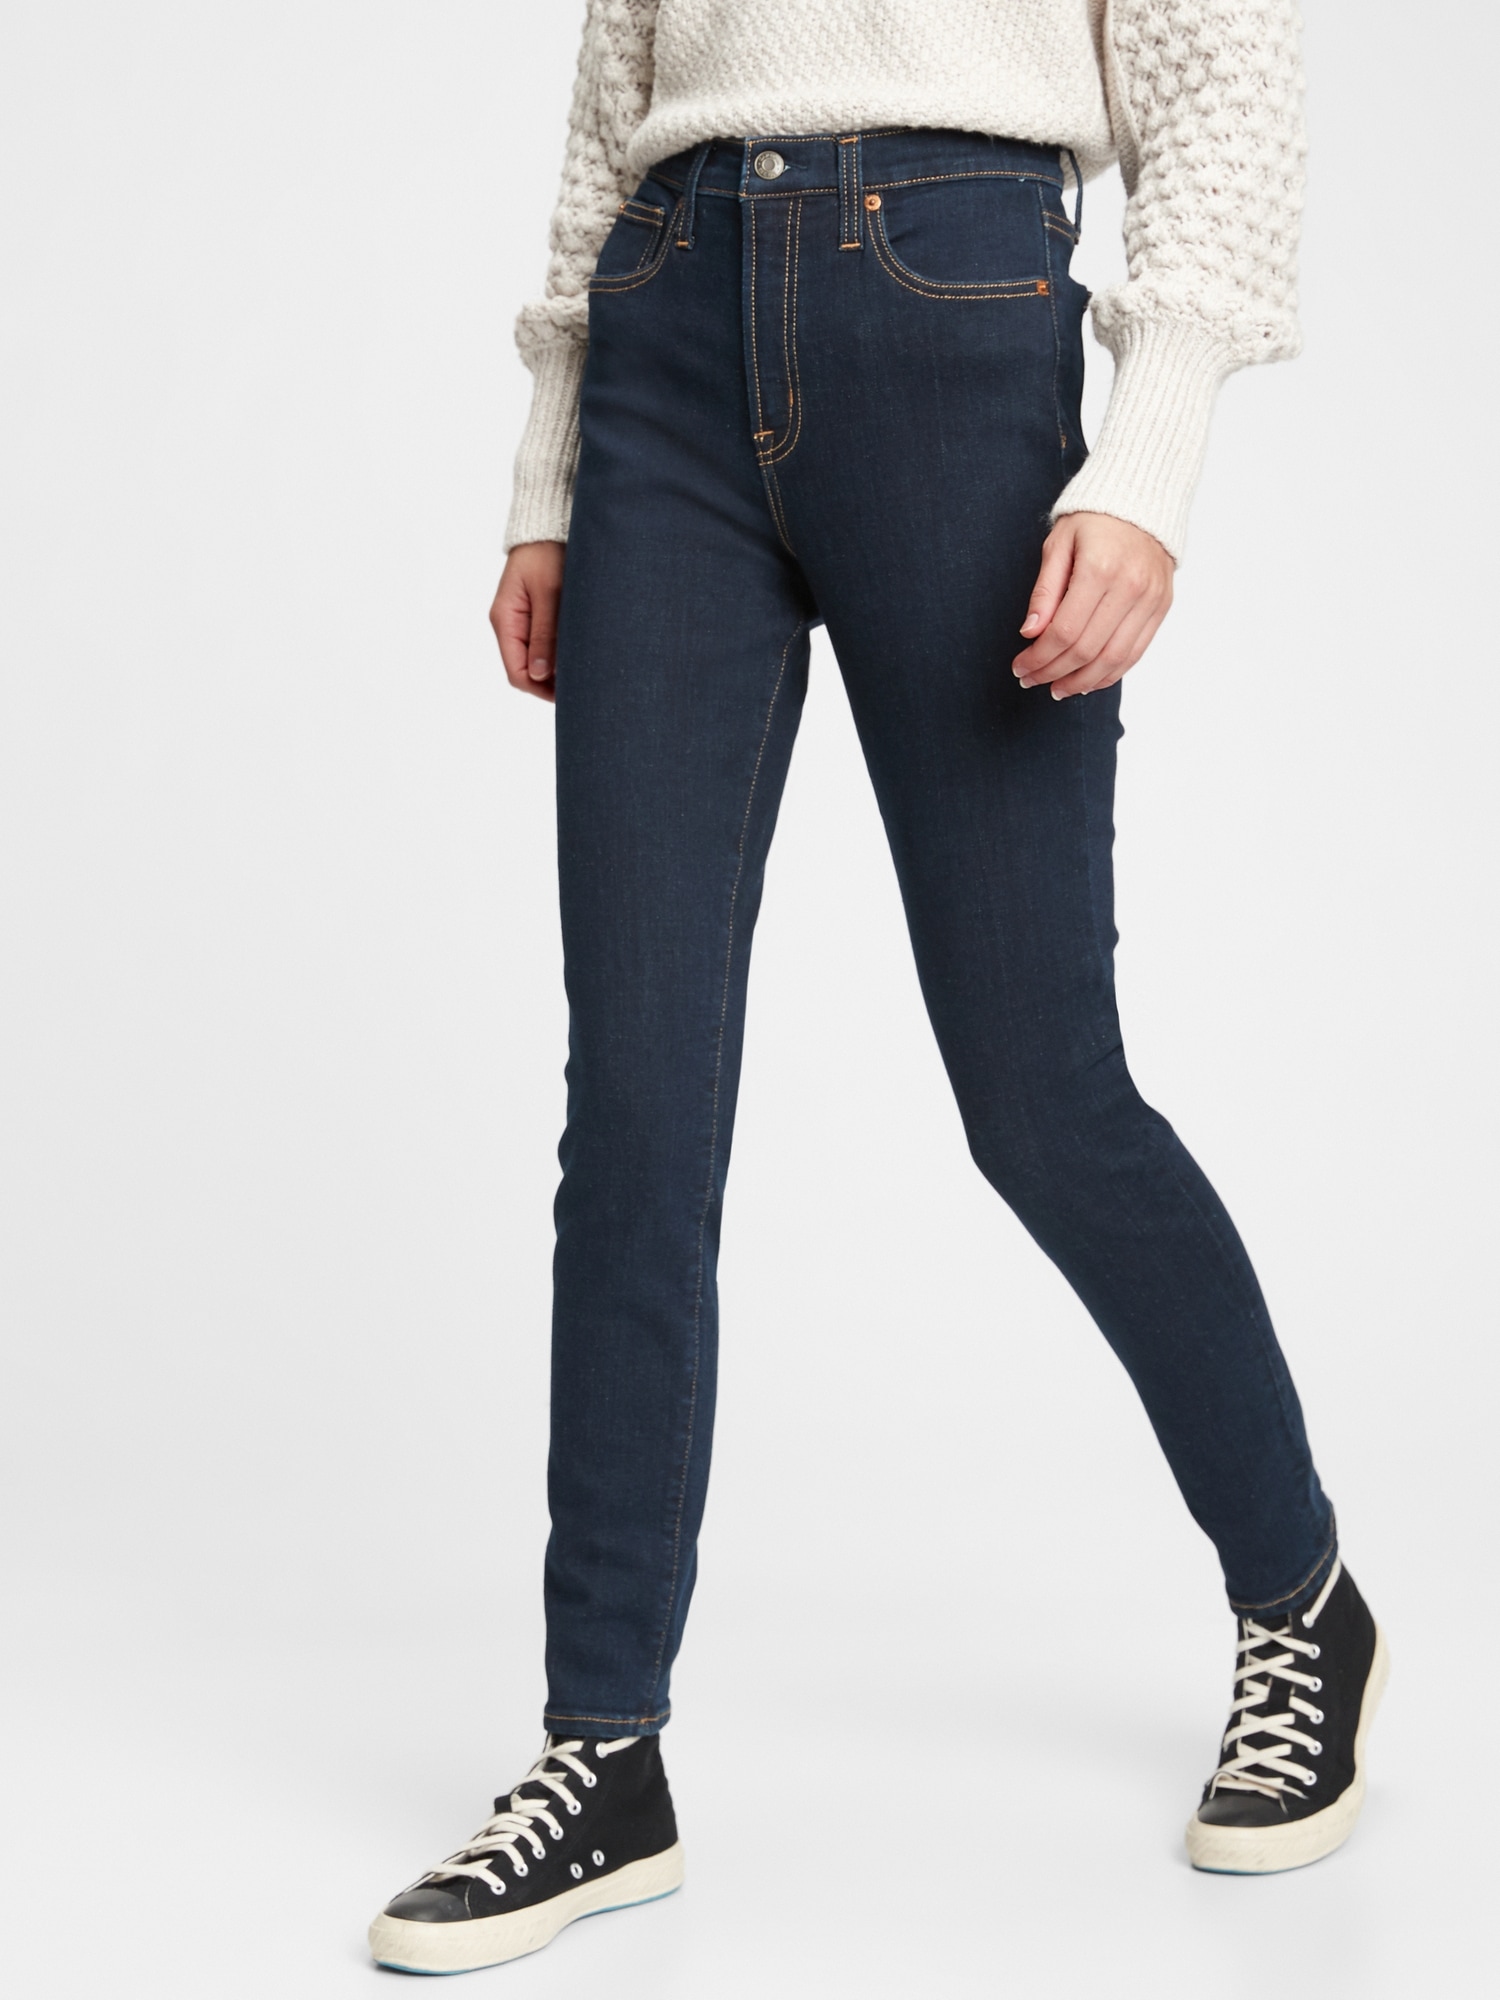 gap true skinny high rise jeans